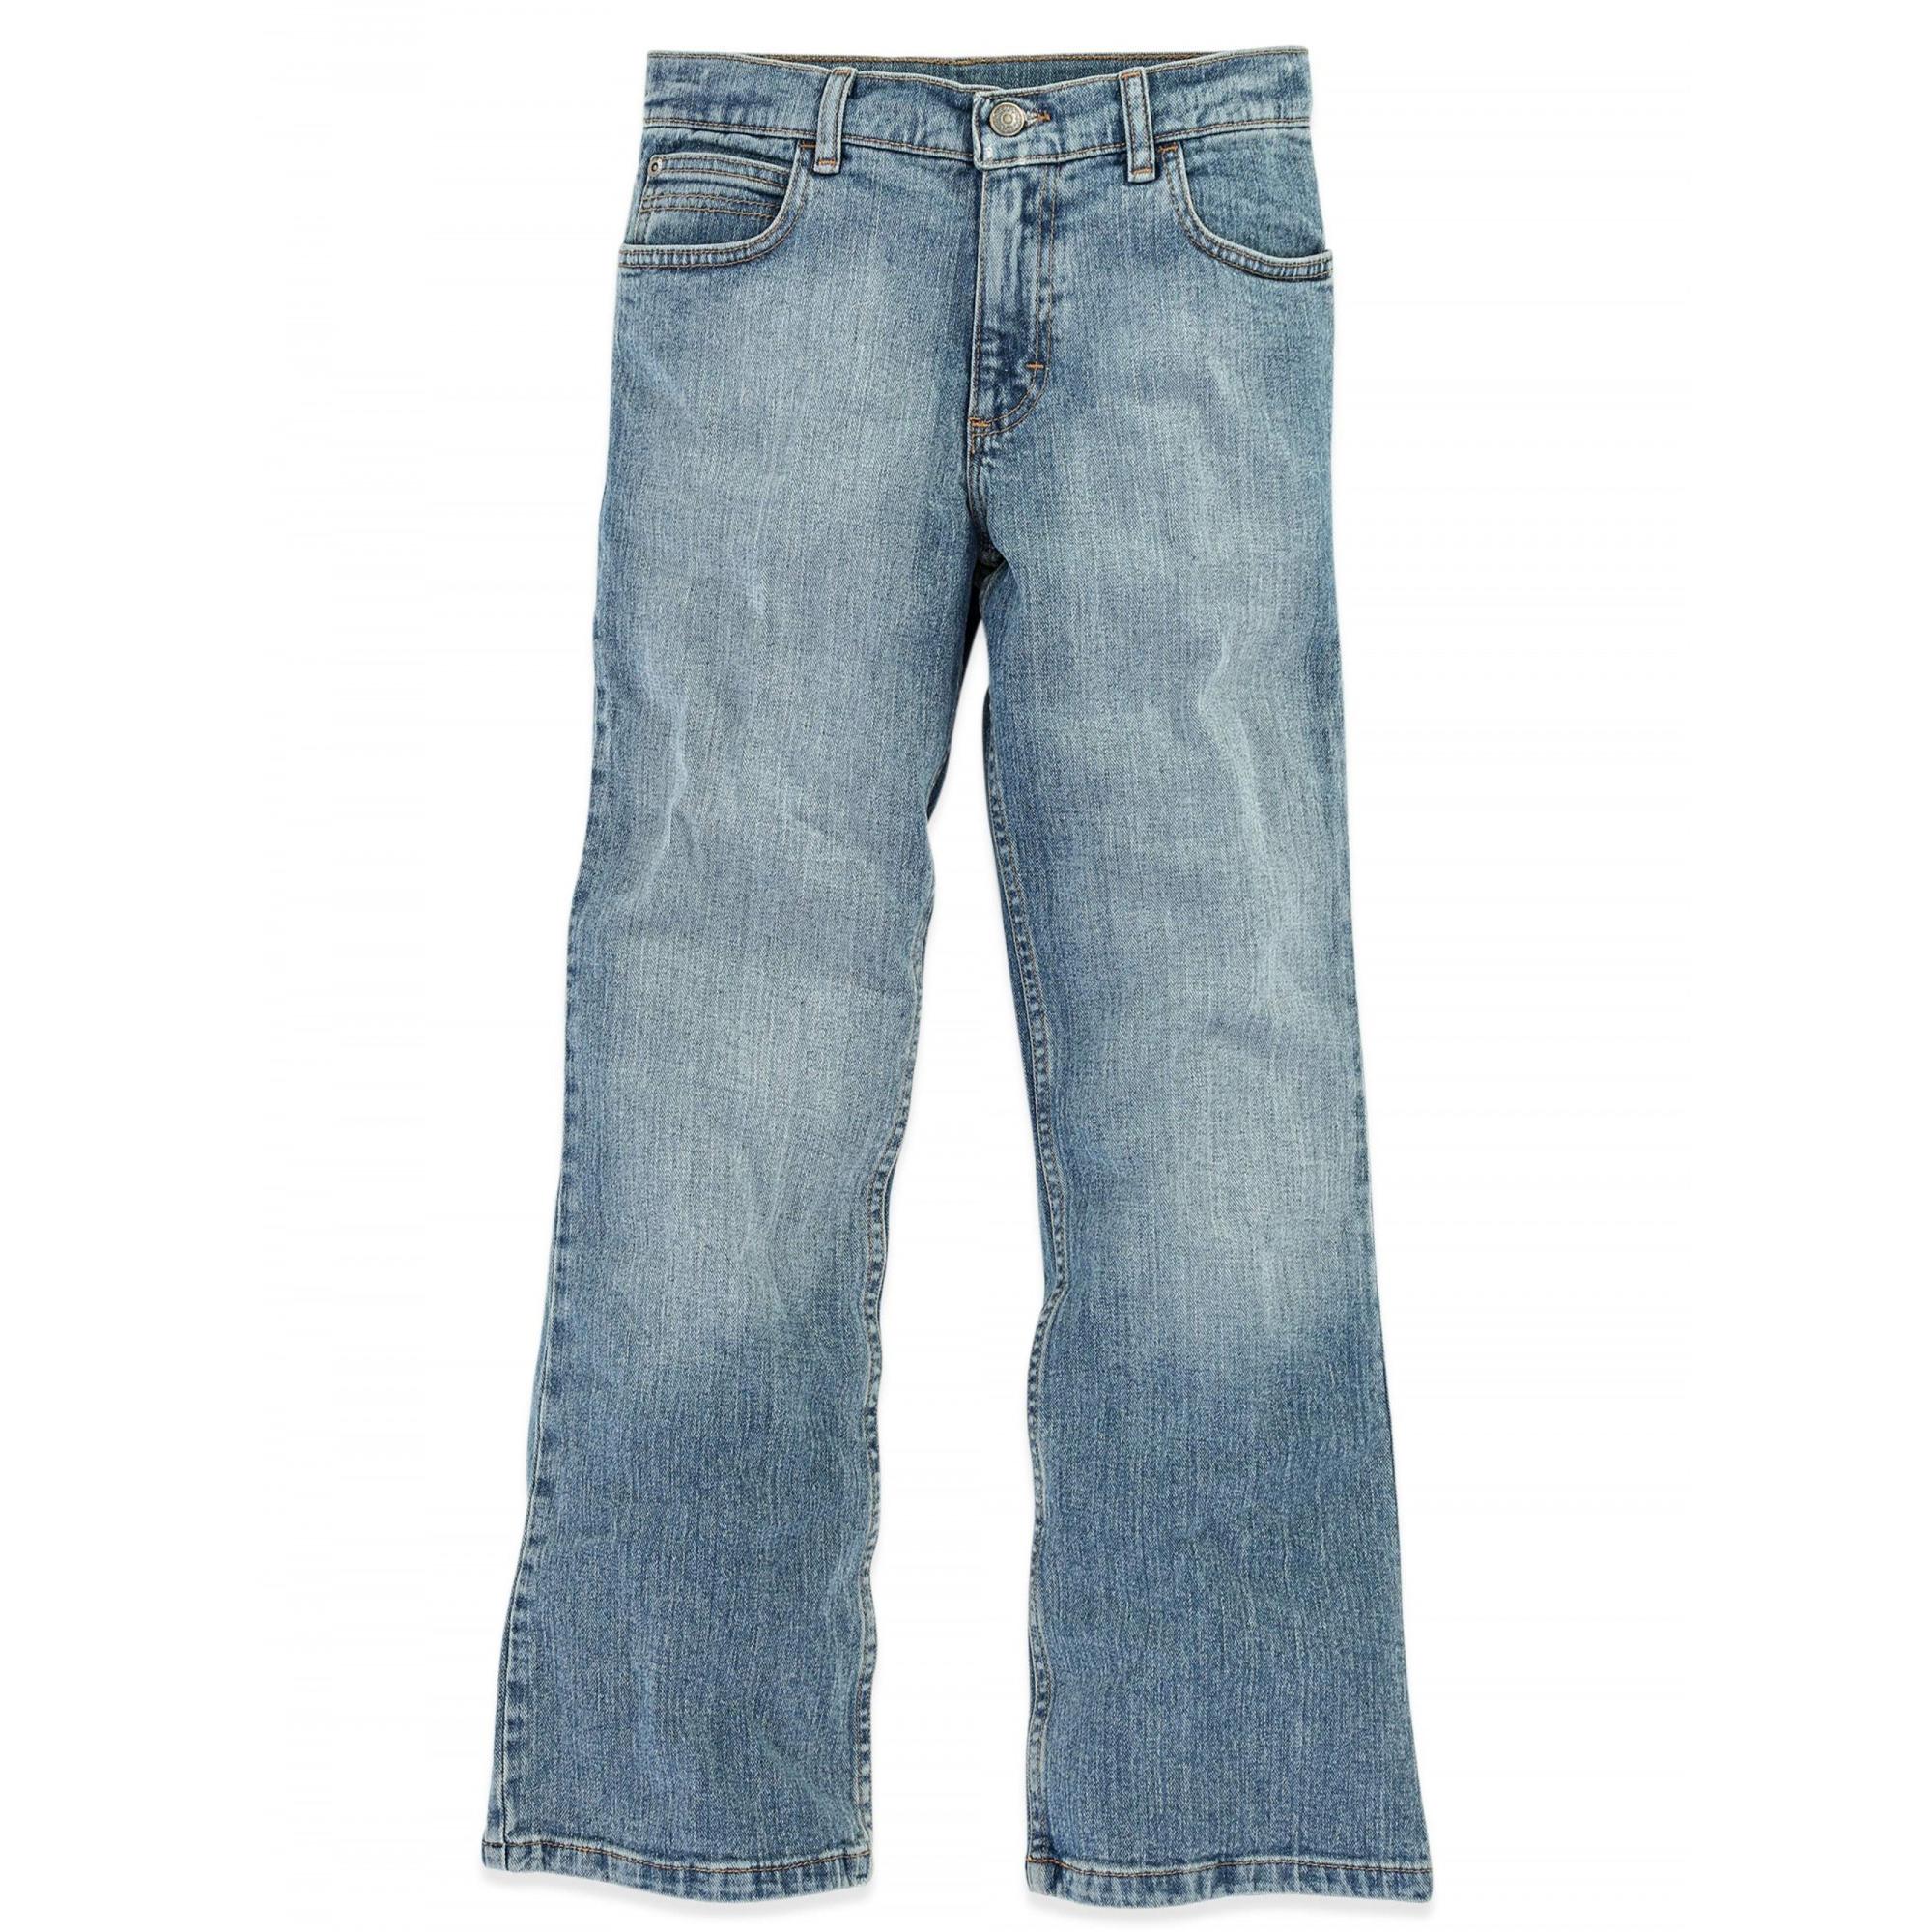 Wrangler Boys Bootcut Denim Jeans, Sizes 4-18 & Husky - image 1 of 5